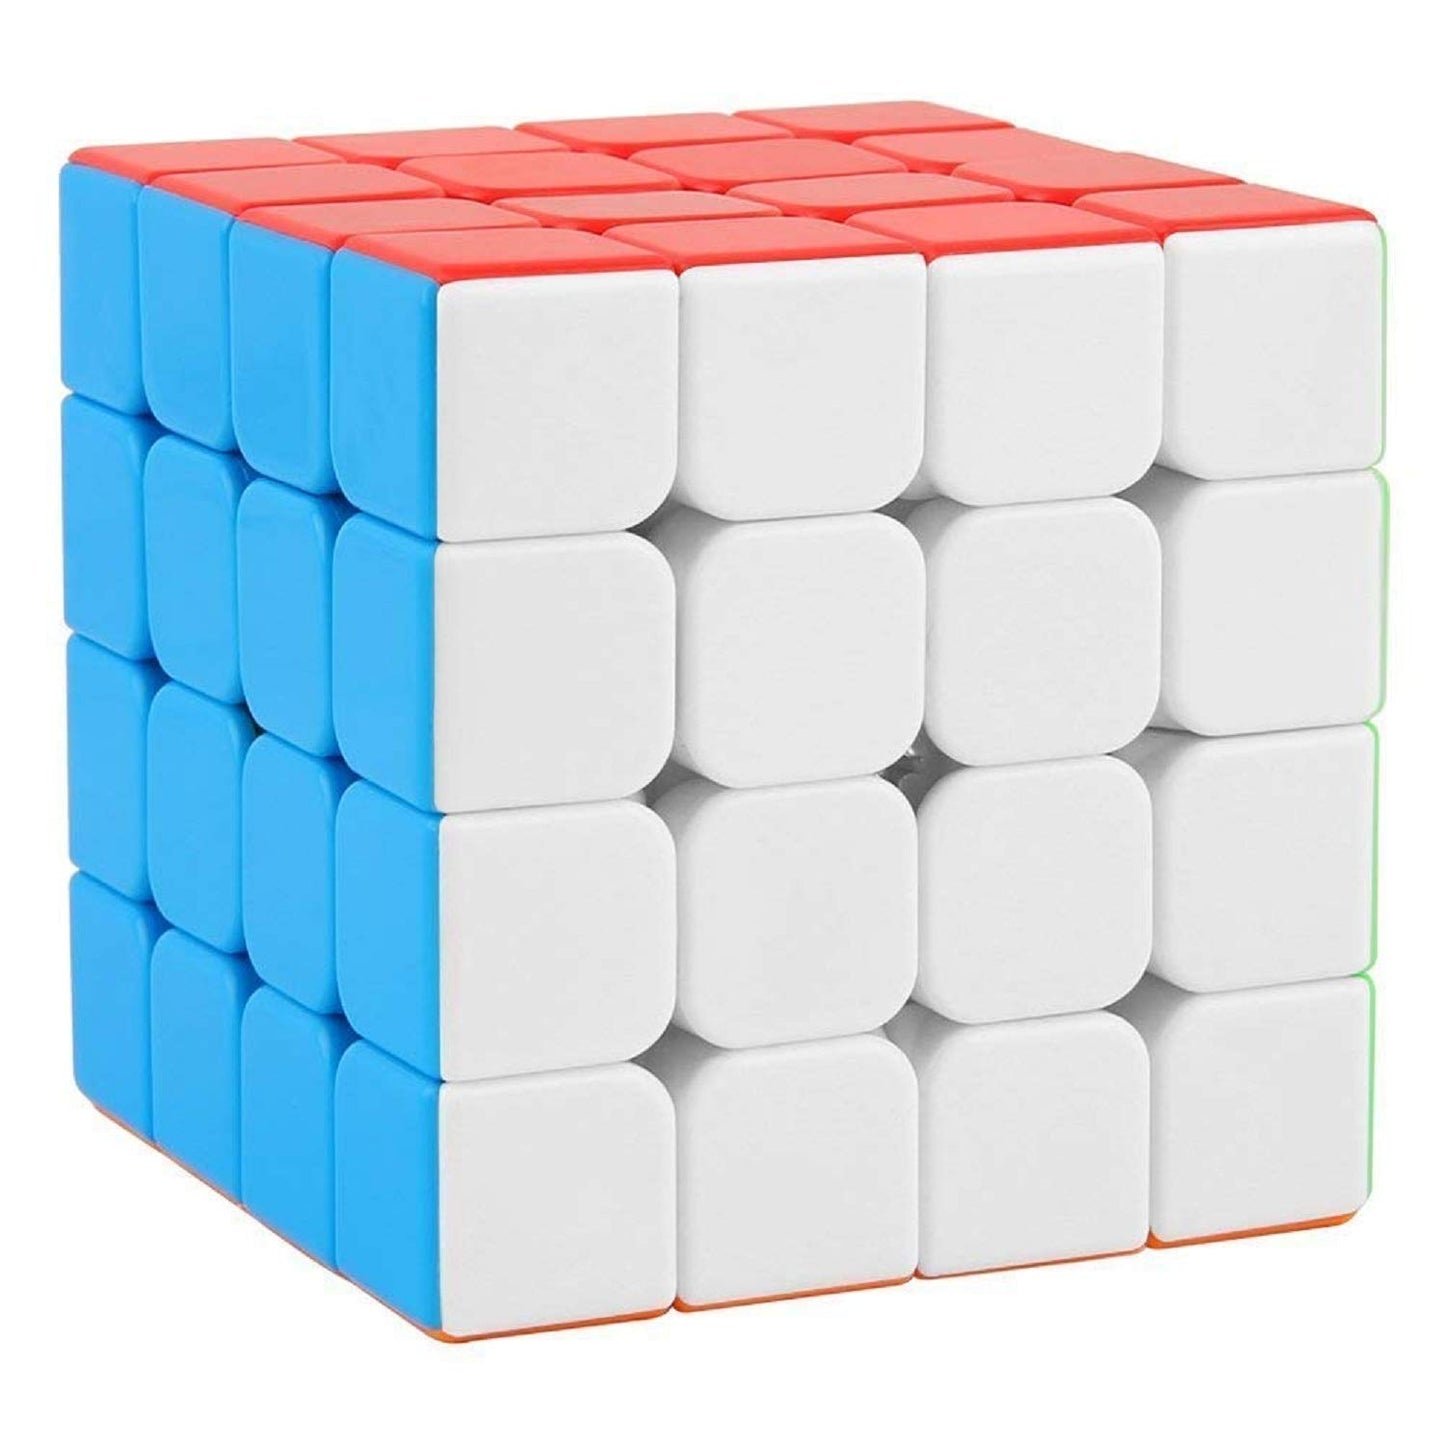 4*4 Cube